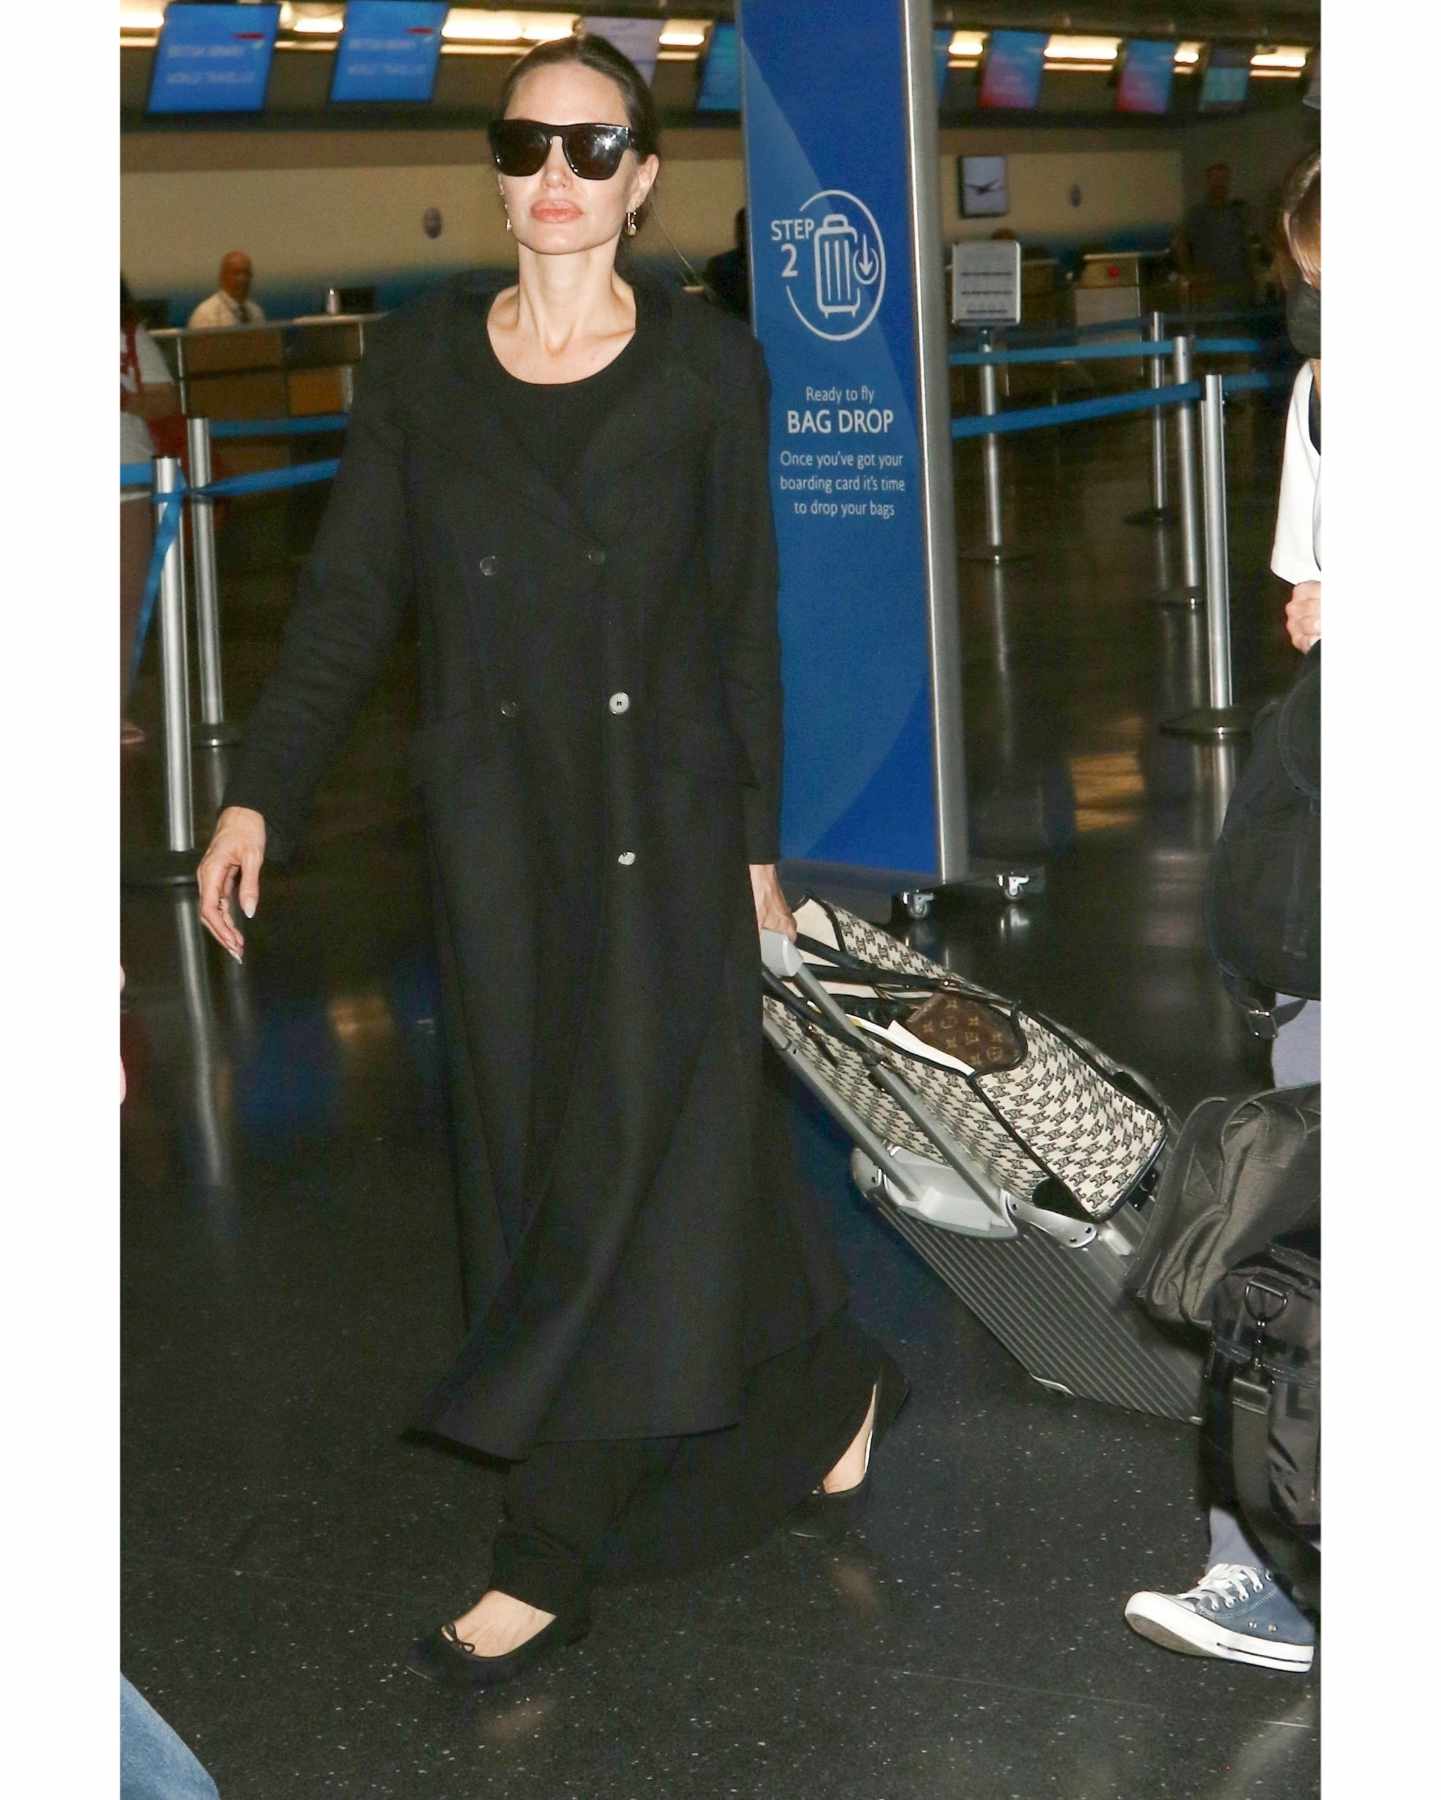 Angelina Jolie Wearing Black Flats